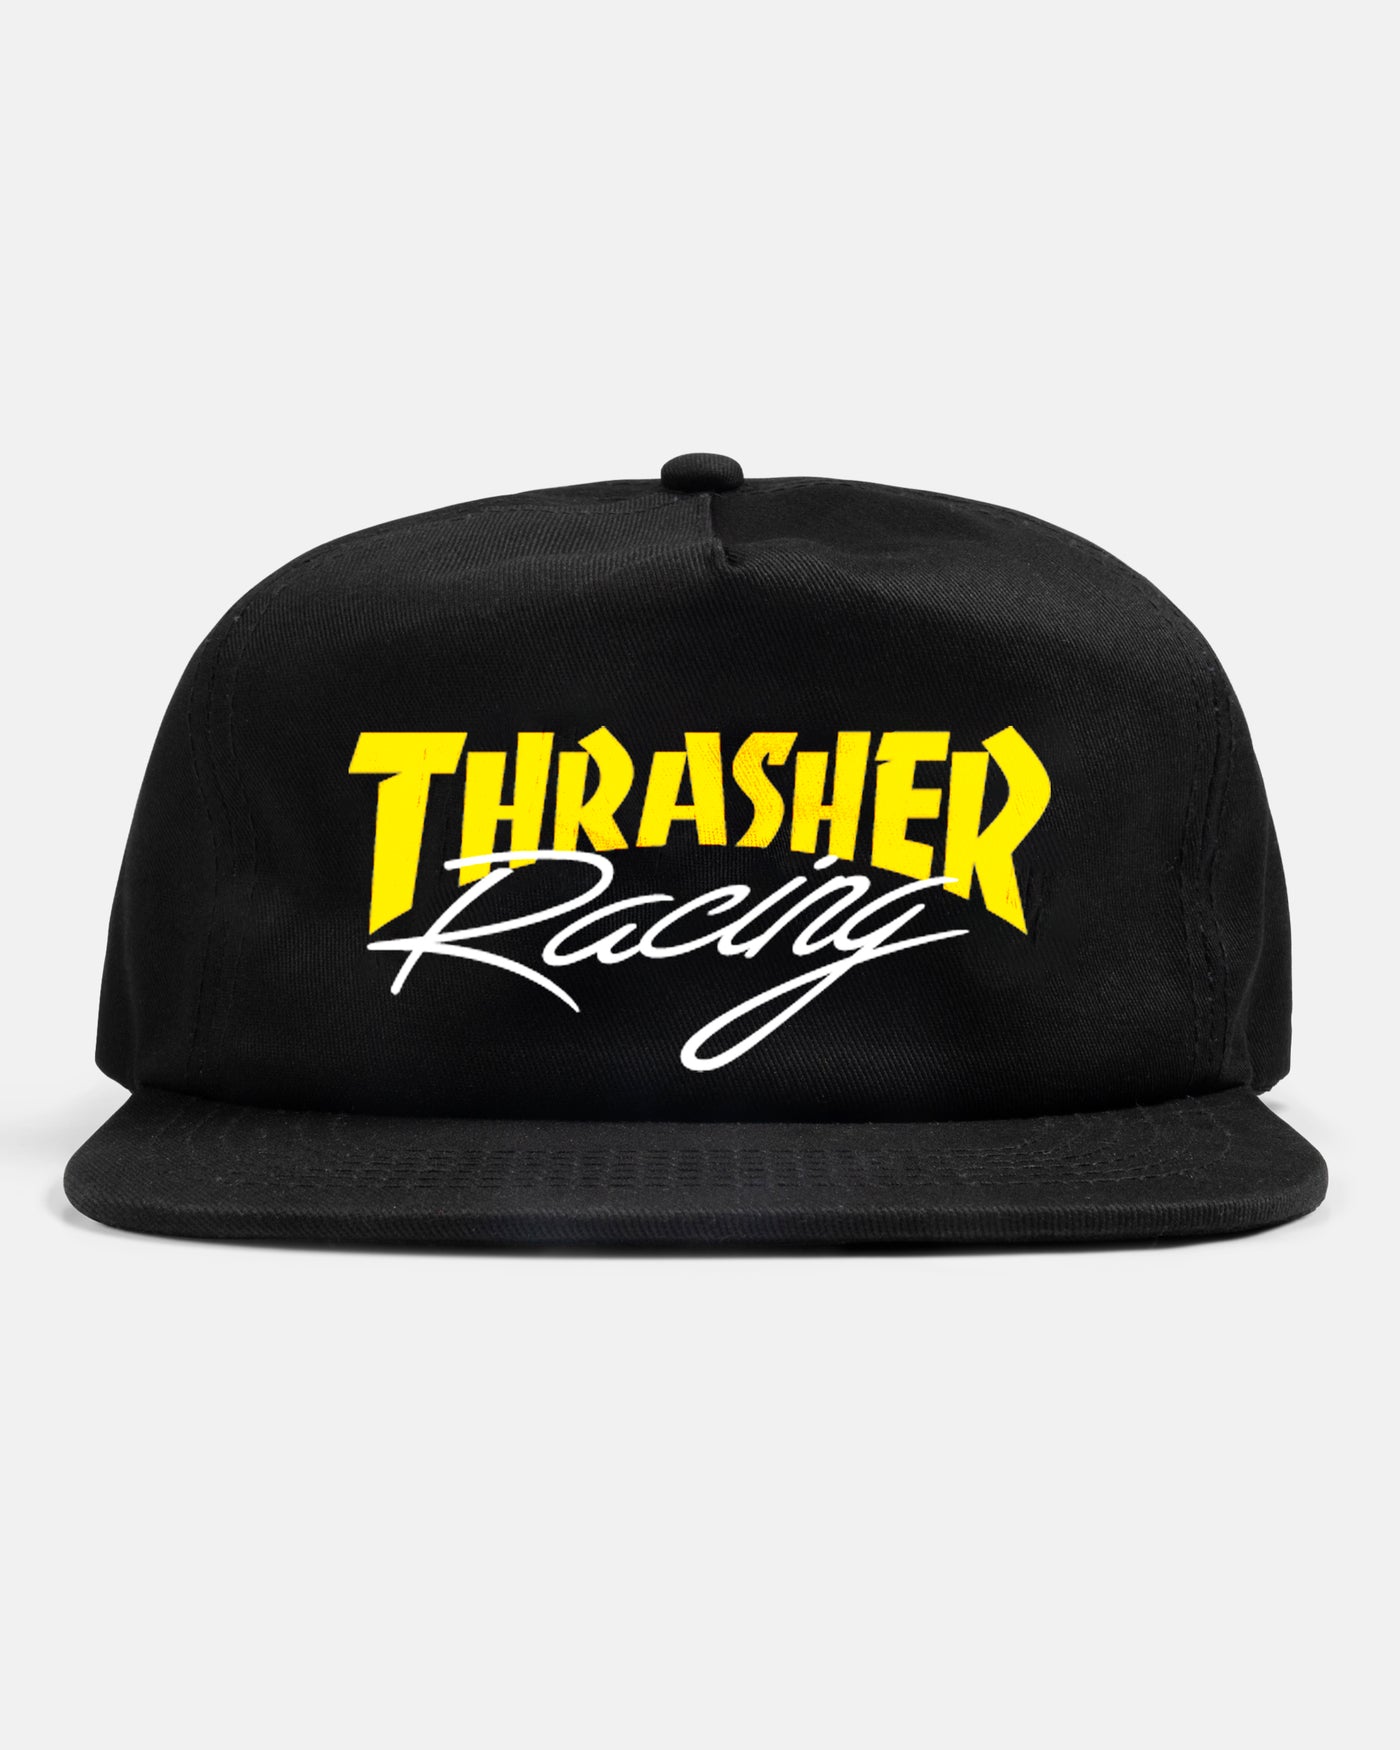 Thrasher - Gorro Snapback Thrasher Racing Black - Lo Mejor De Thrasher - Solo Por $29990! Compra Ahora En Wallride Skateshop